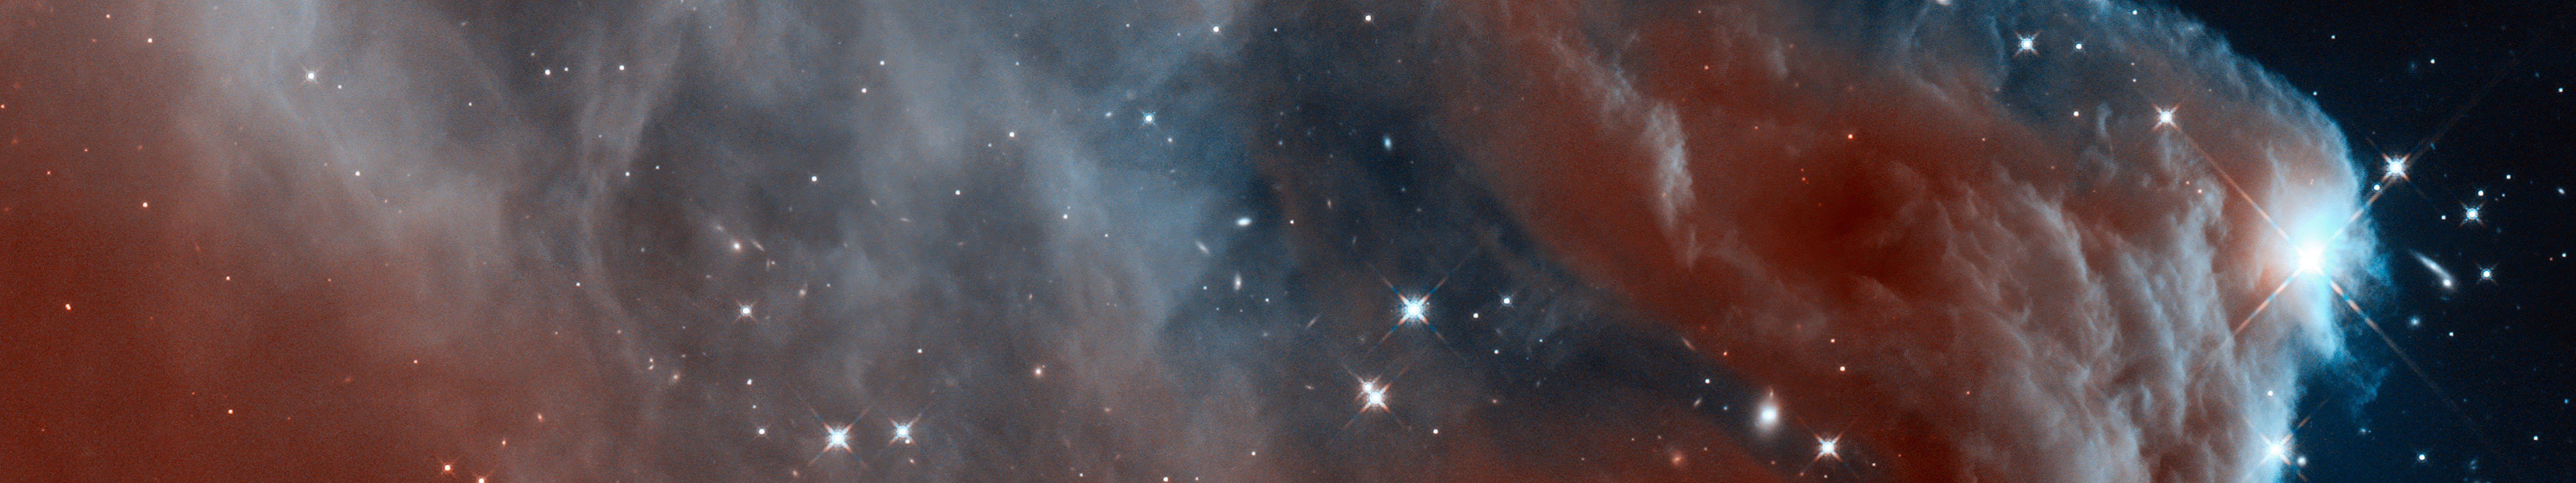 ESA, Hubble Deep Field, Space, Nebula, Stars, Suns, Galaxy, Horsehead Nebula, Triple screen, Multiple display Wallpaper